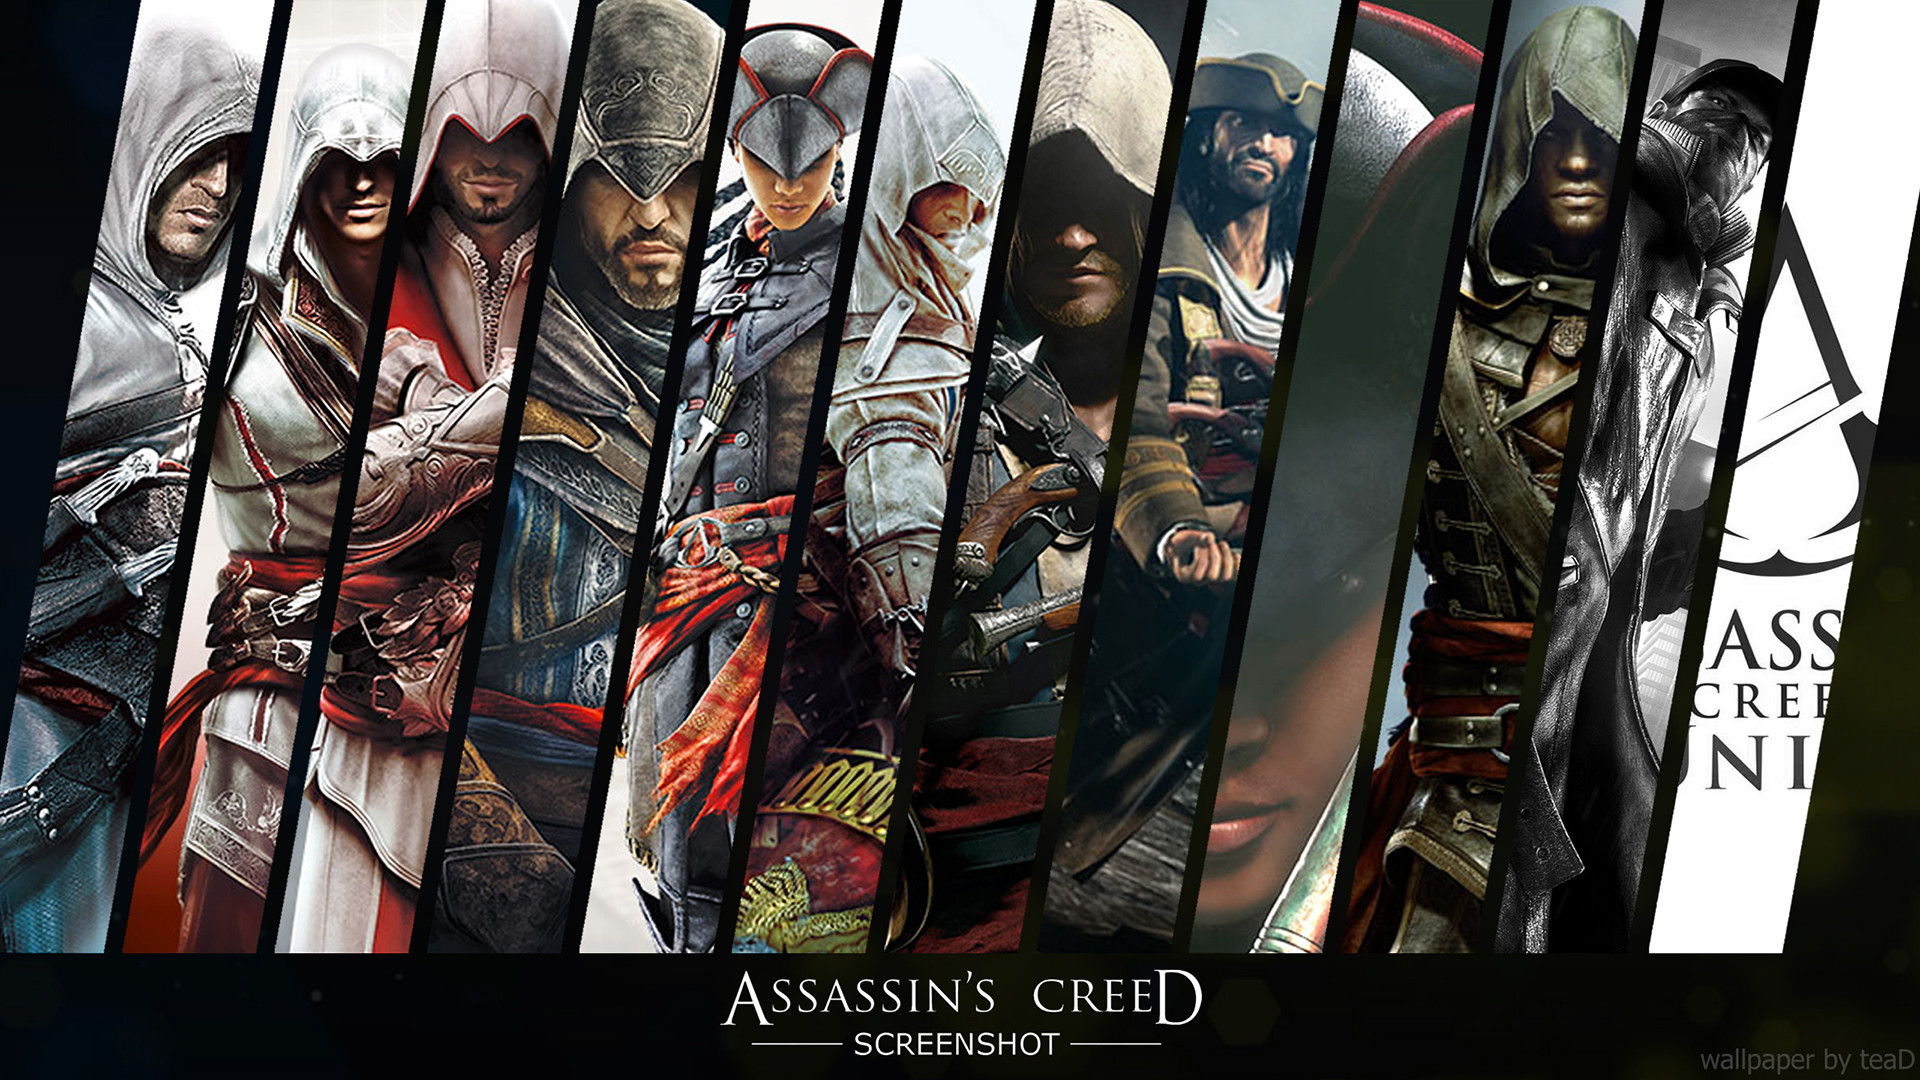 1920x1080 Assassins Creed Screenshot promo wallpaper by santap555 Assassins Creed  Screenshot promo wallpaper by santap555